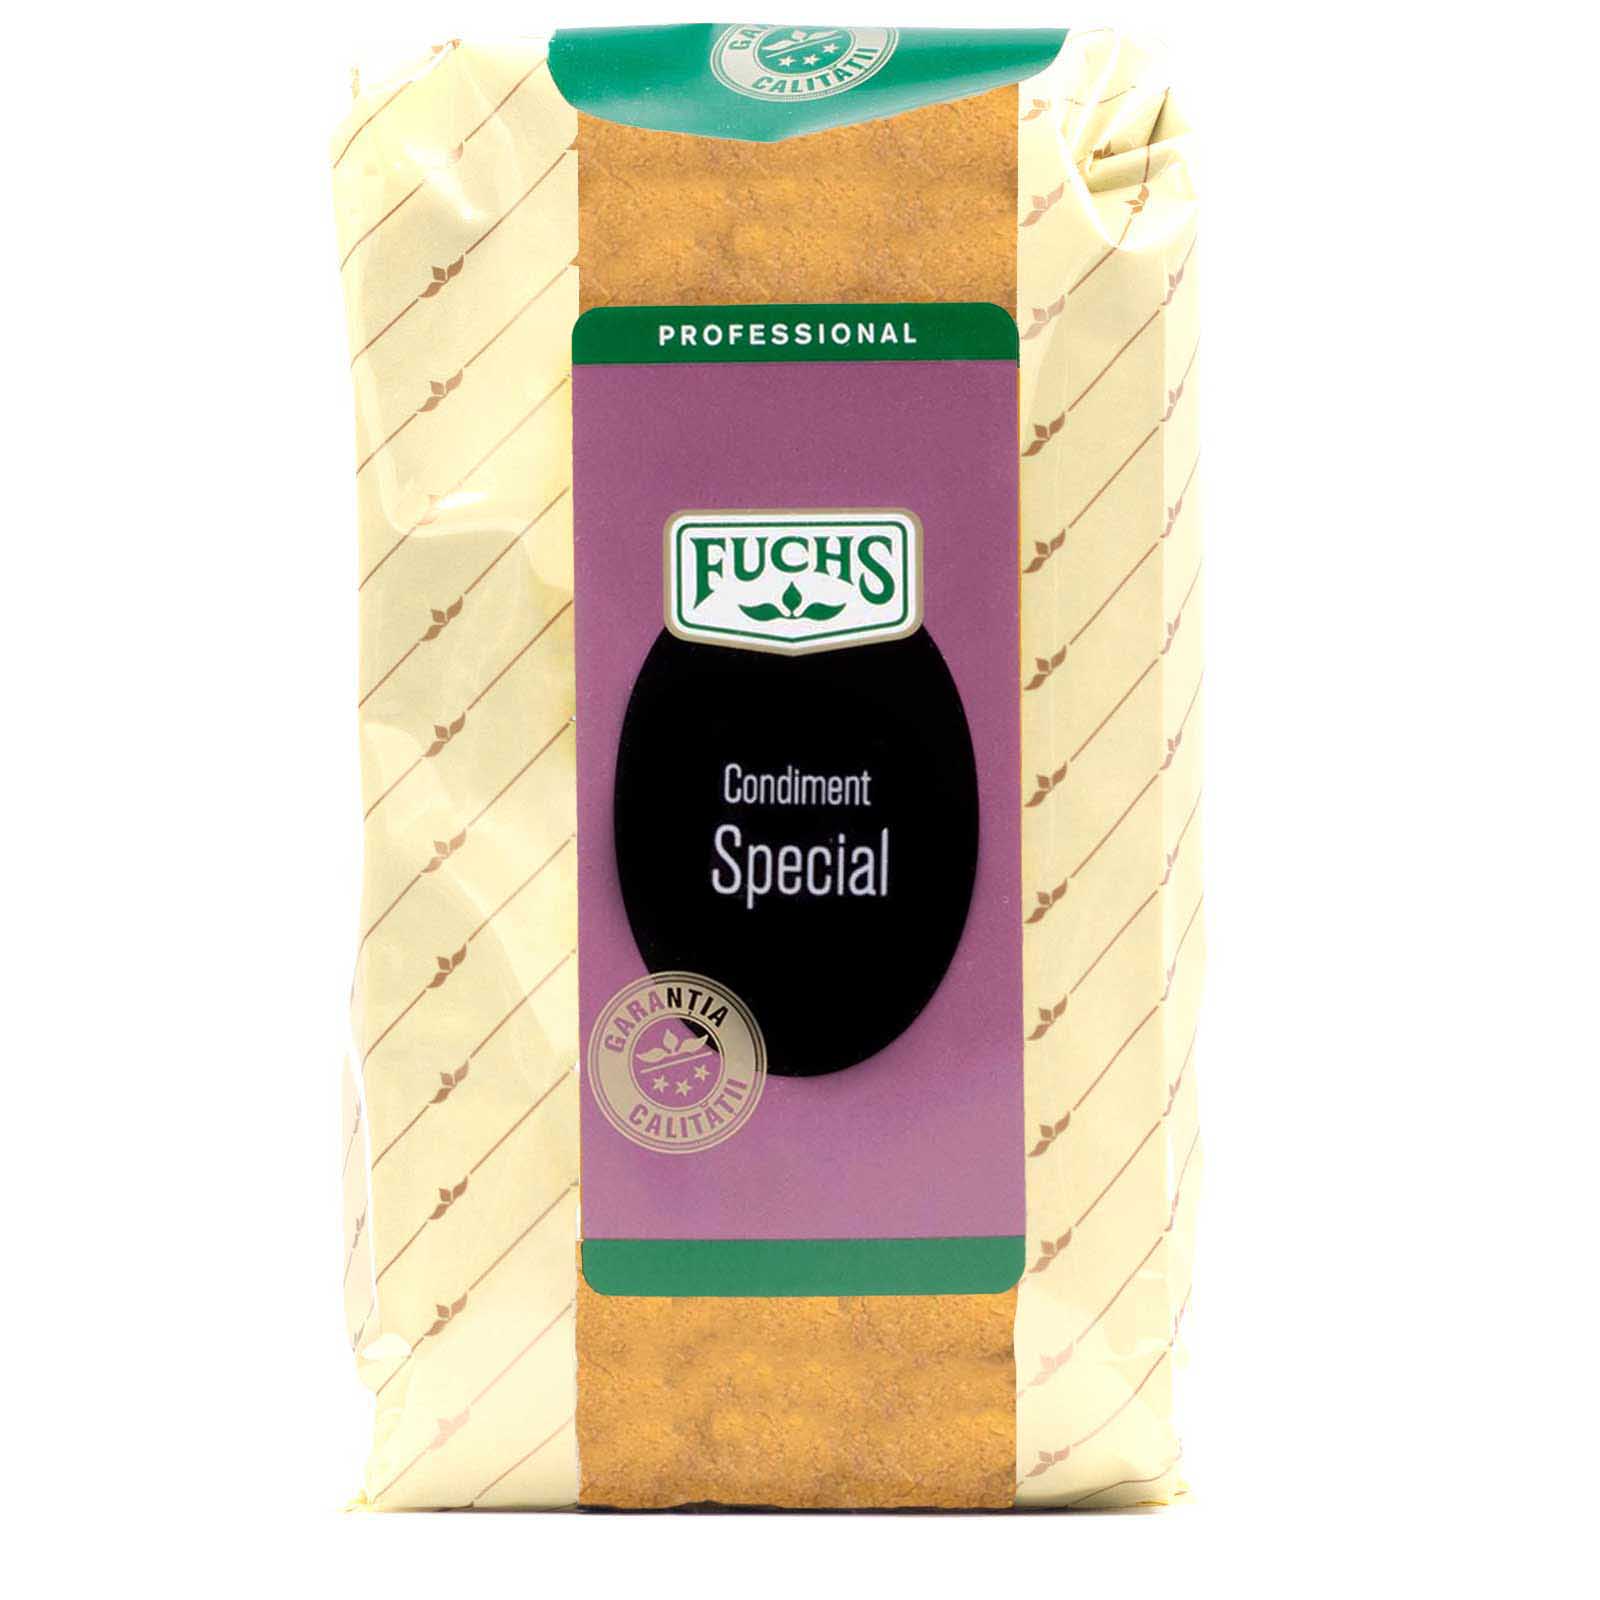 Condiment special, Fuchs, 900g